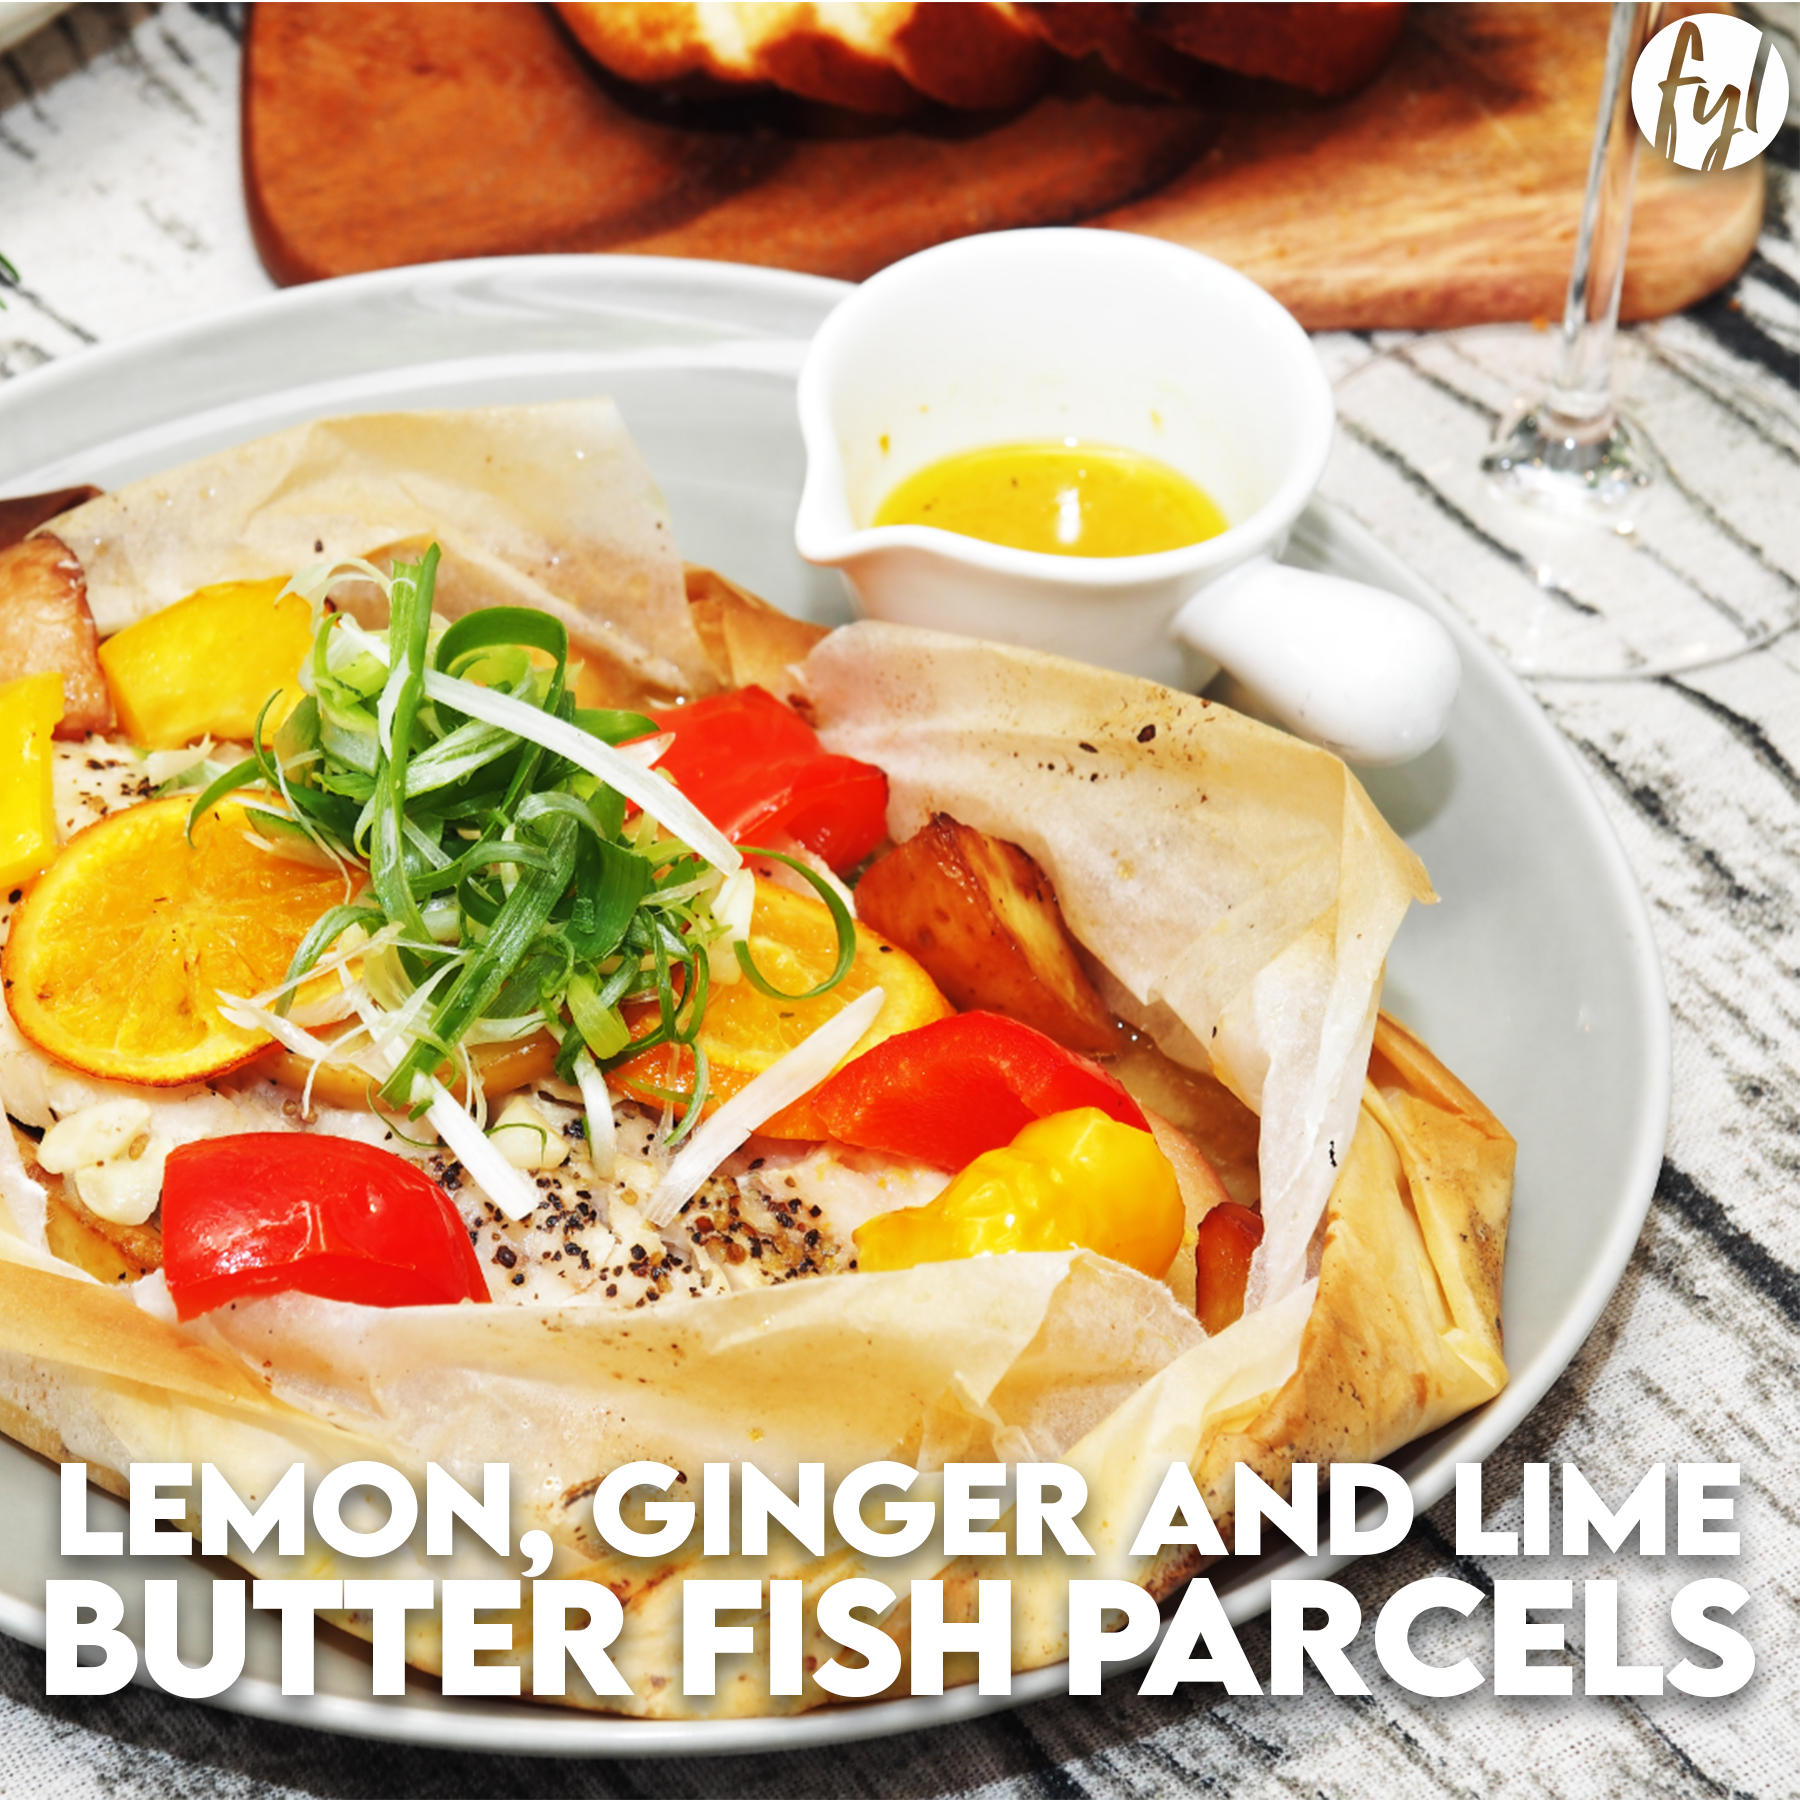 Recipe: Lower Salt Lemon, Ginger and Lime Butter Fish Parcels #KidneyHealthWeek